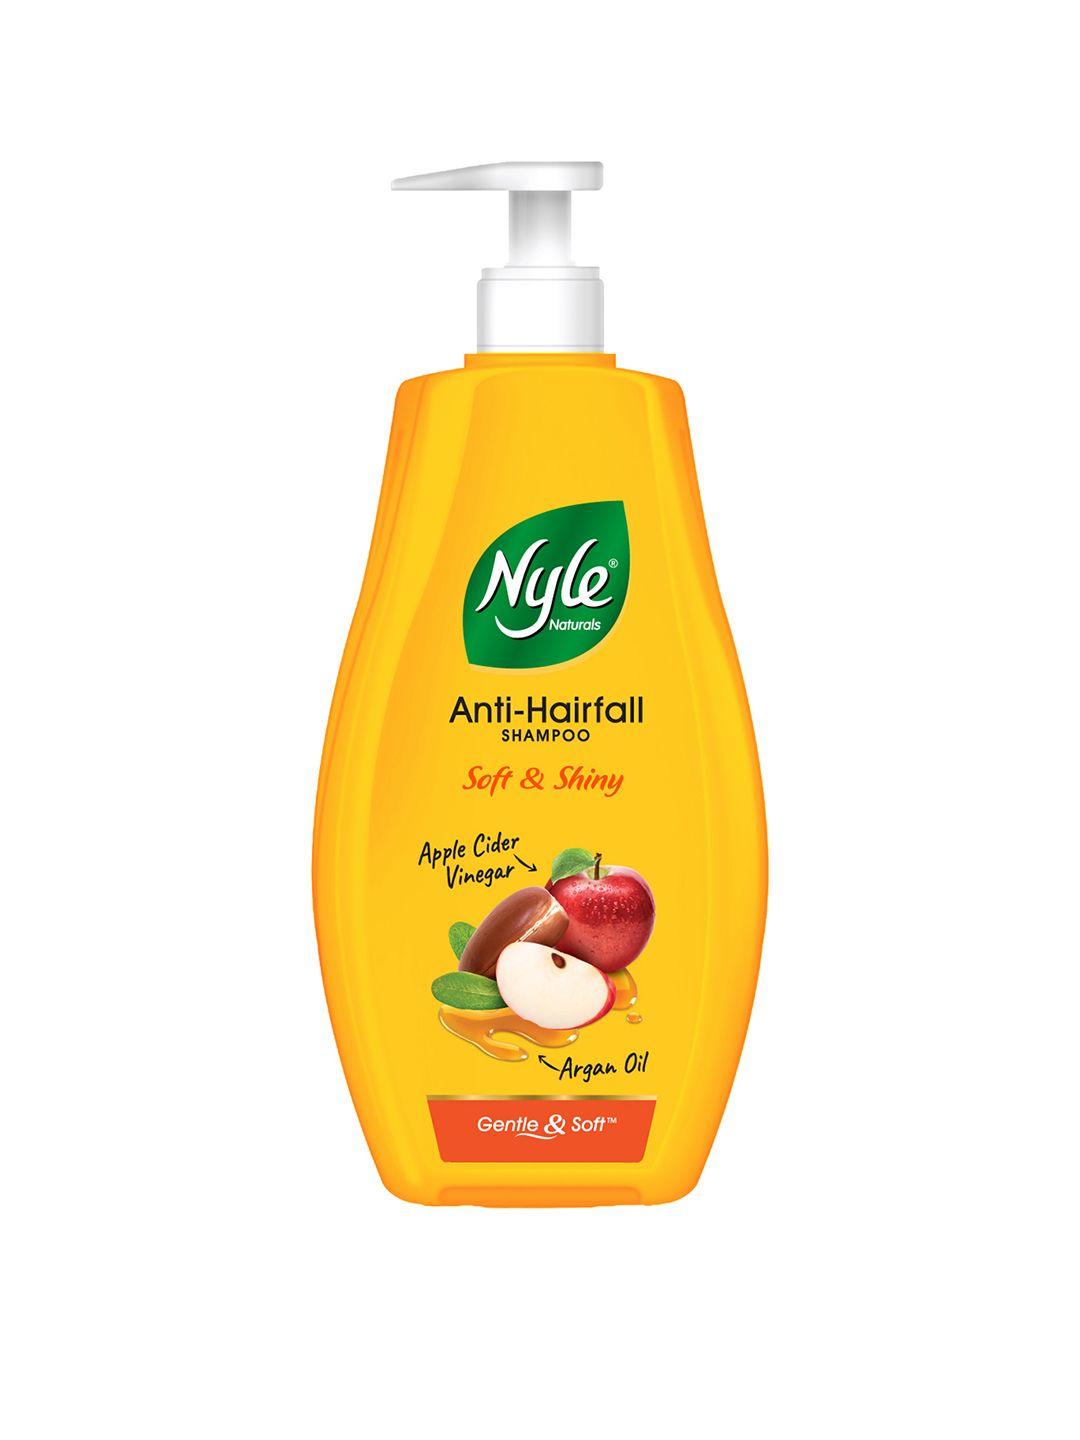 nyle naturals soft & shiny anti hairfall shampoo with apple cider vinegar & argan oil - 1l